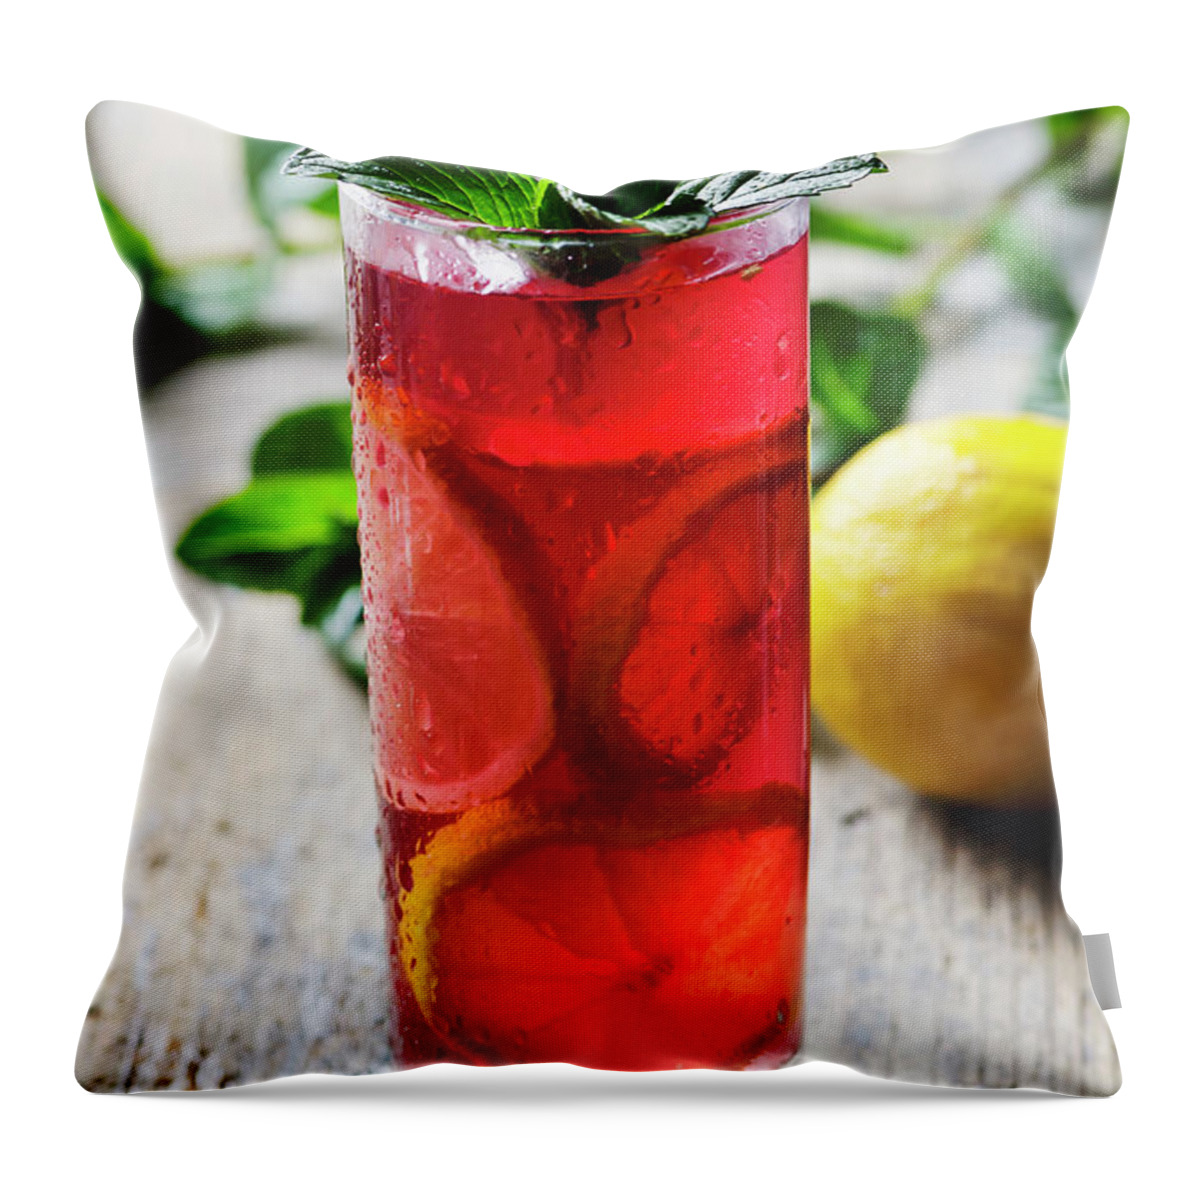 Juice Throw Pillow featuring the photograph Ice Tea by Jelena Jovanovic